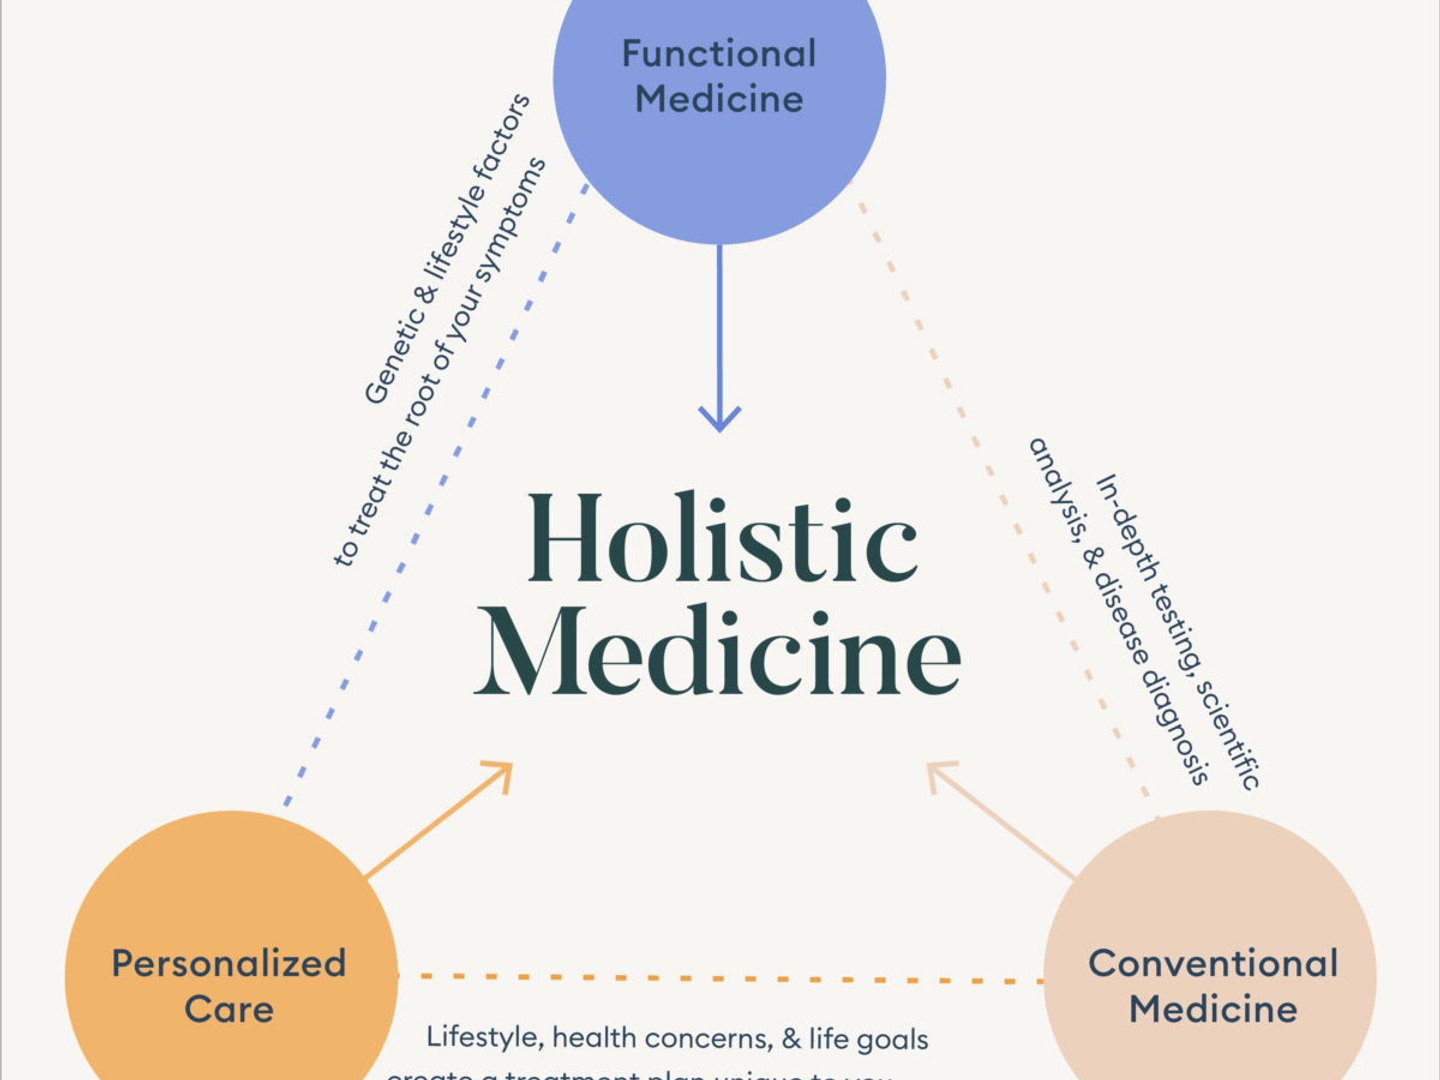 Holistic medicine practices